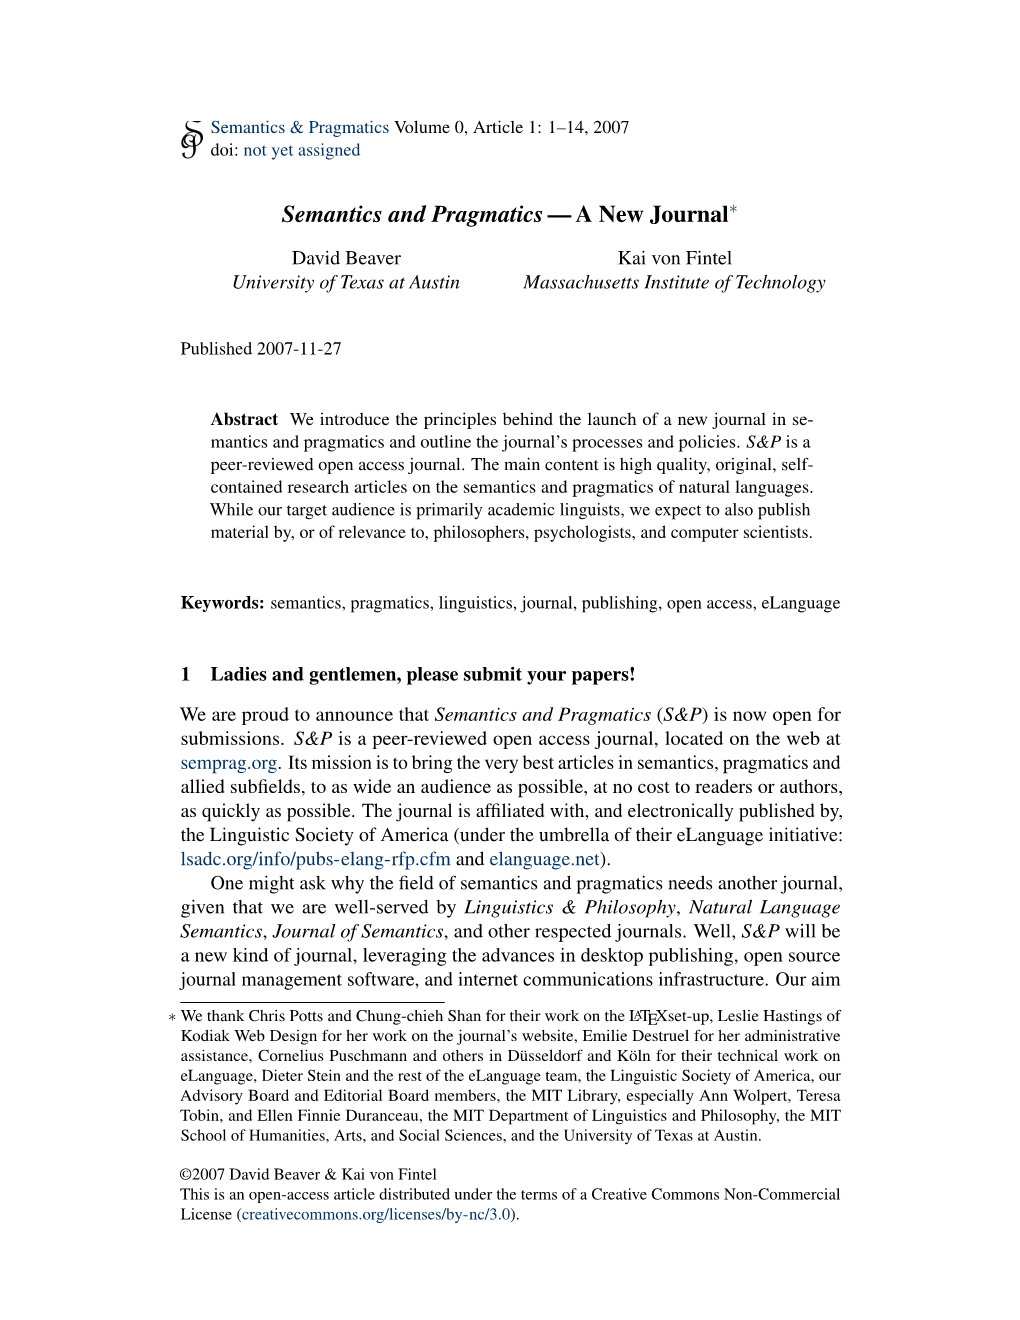 Semantics and Pragmatics -- a New Journal